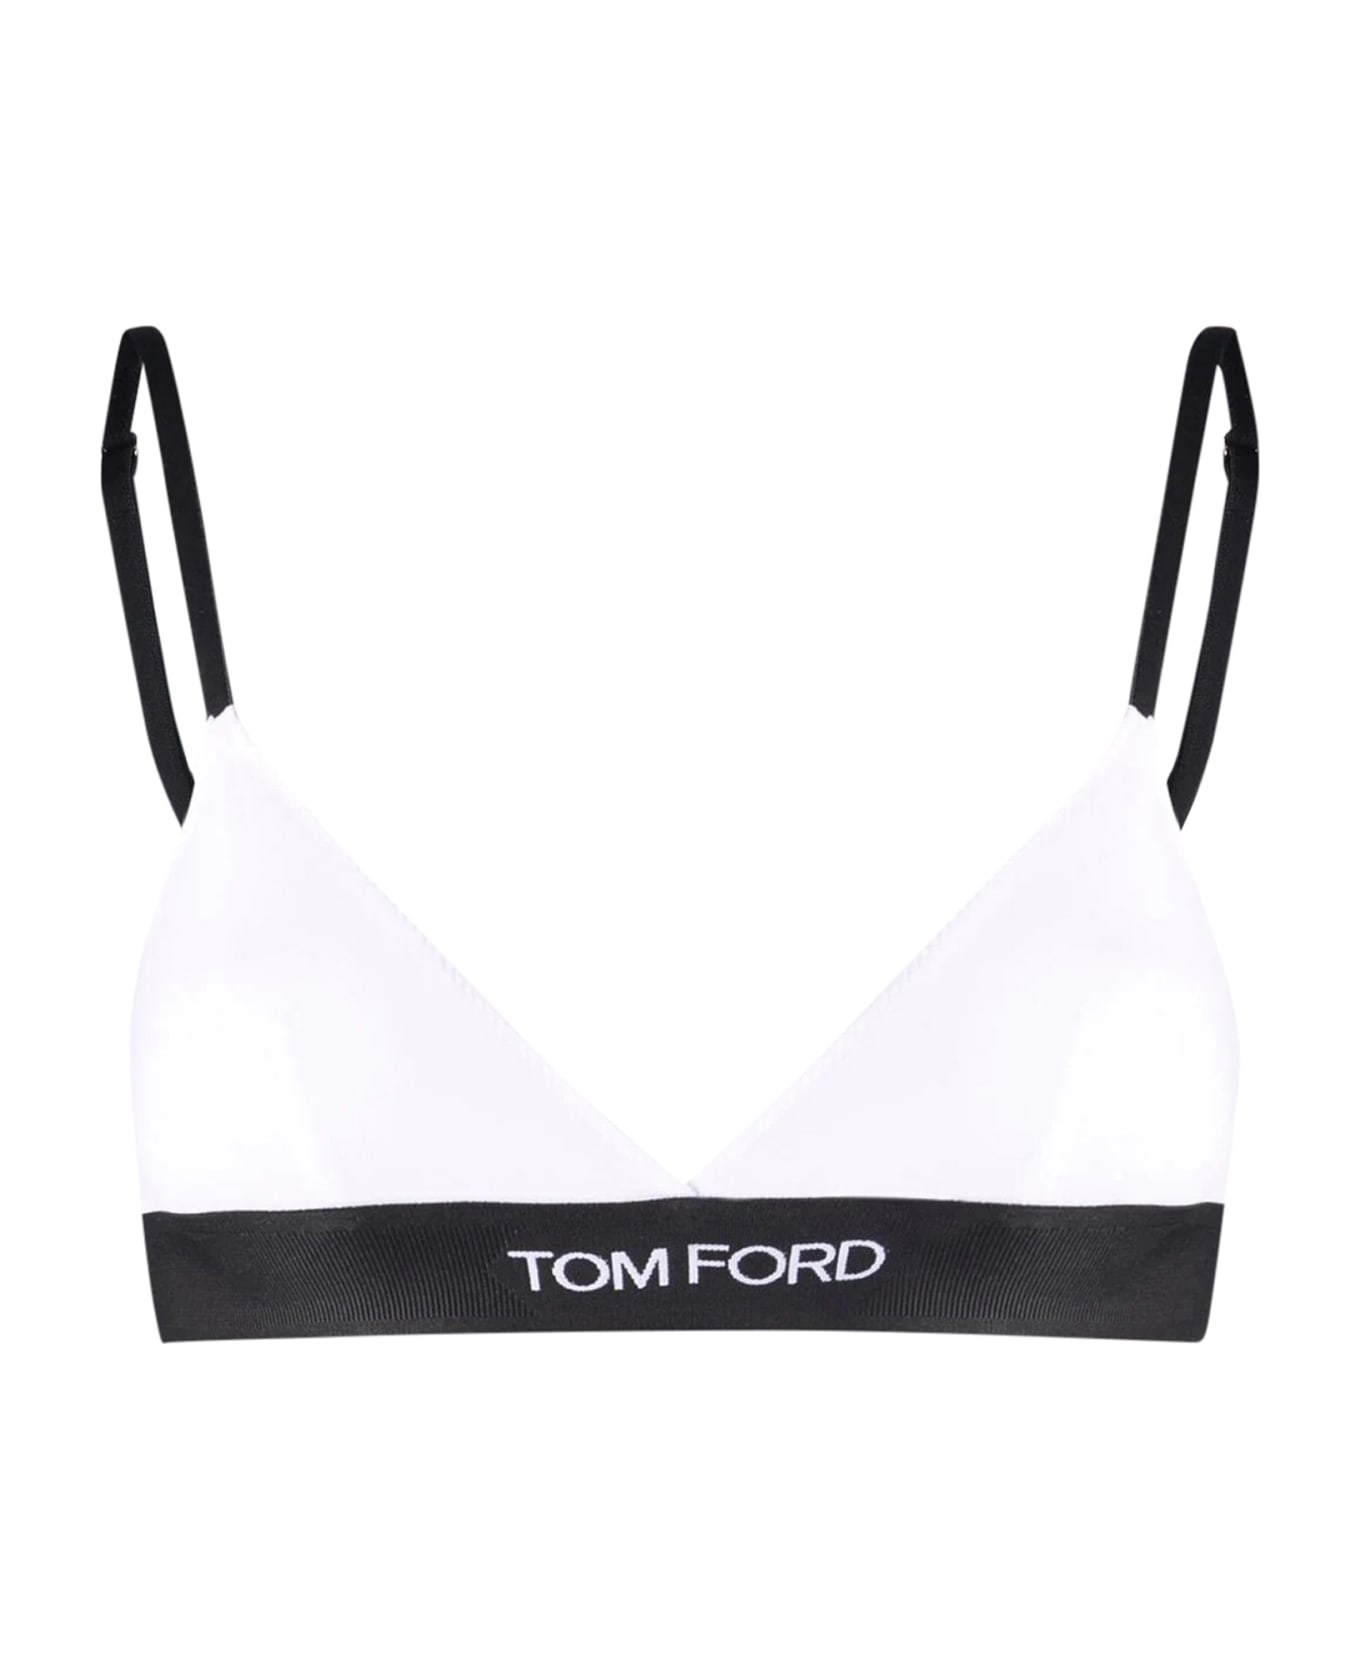 Tom Ford Modal Signature Bra - White